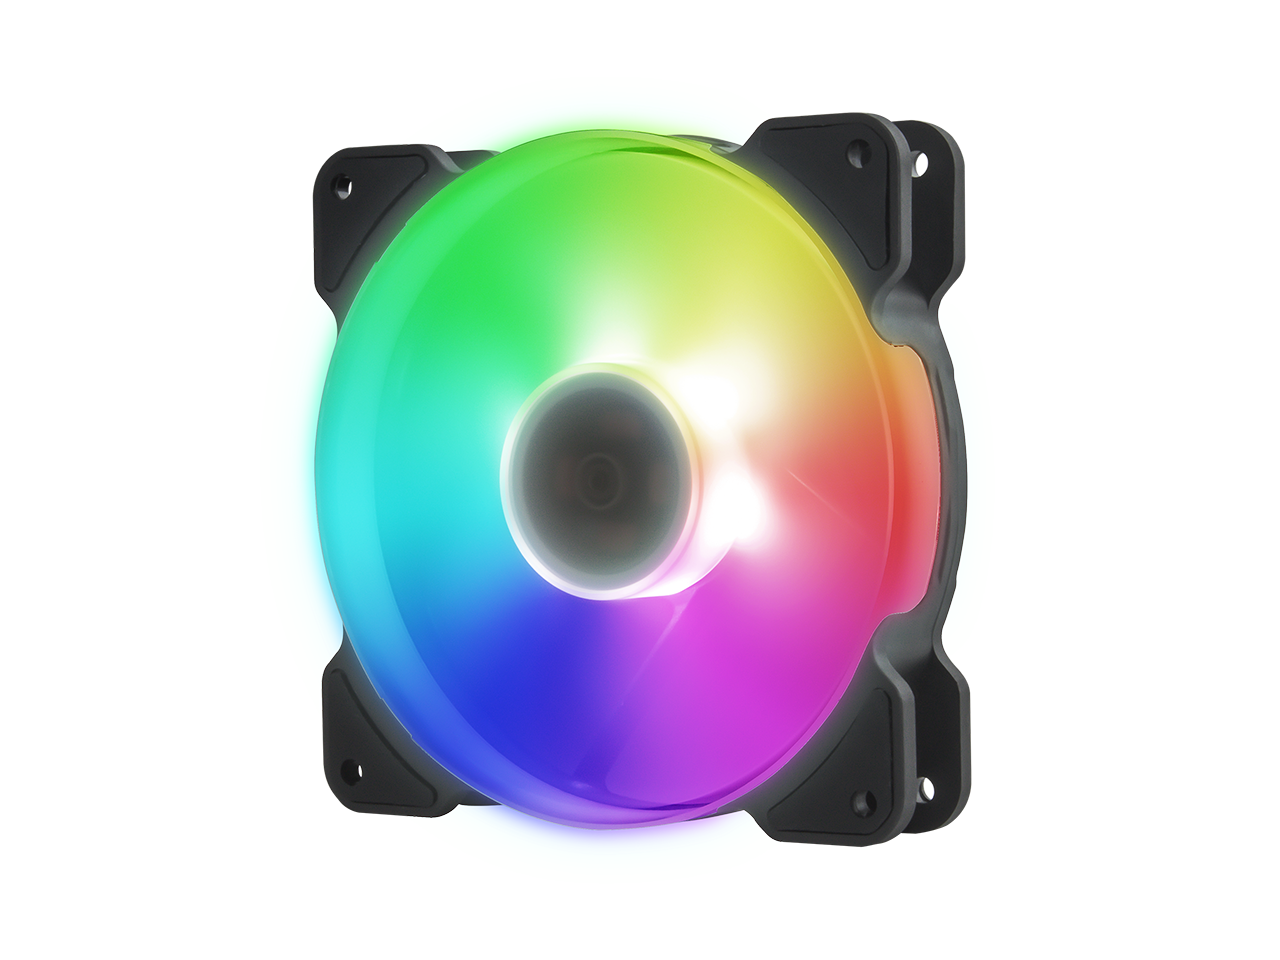 Reeven Kiran Sync High Airflow 120mm Full Color RGB LED Case/CPU cooler Fan, ASUS AURA/ MYSTIC LIGHT/FUSION/ASRock RGB